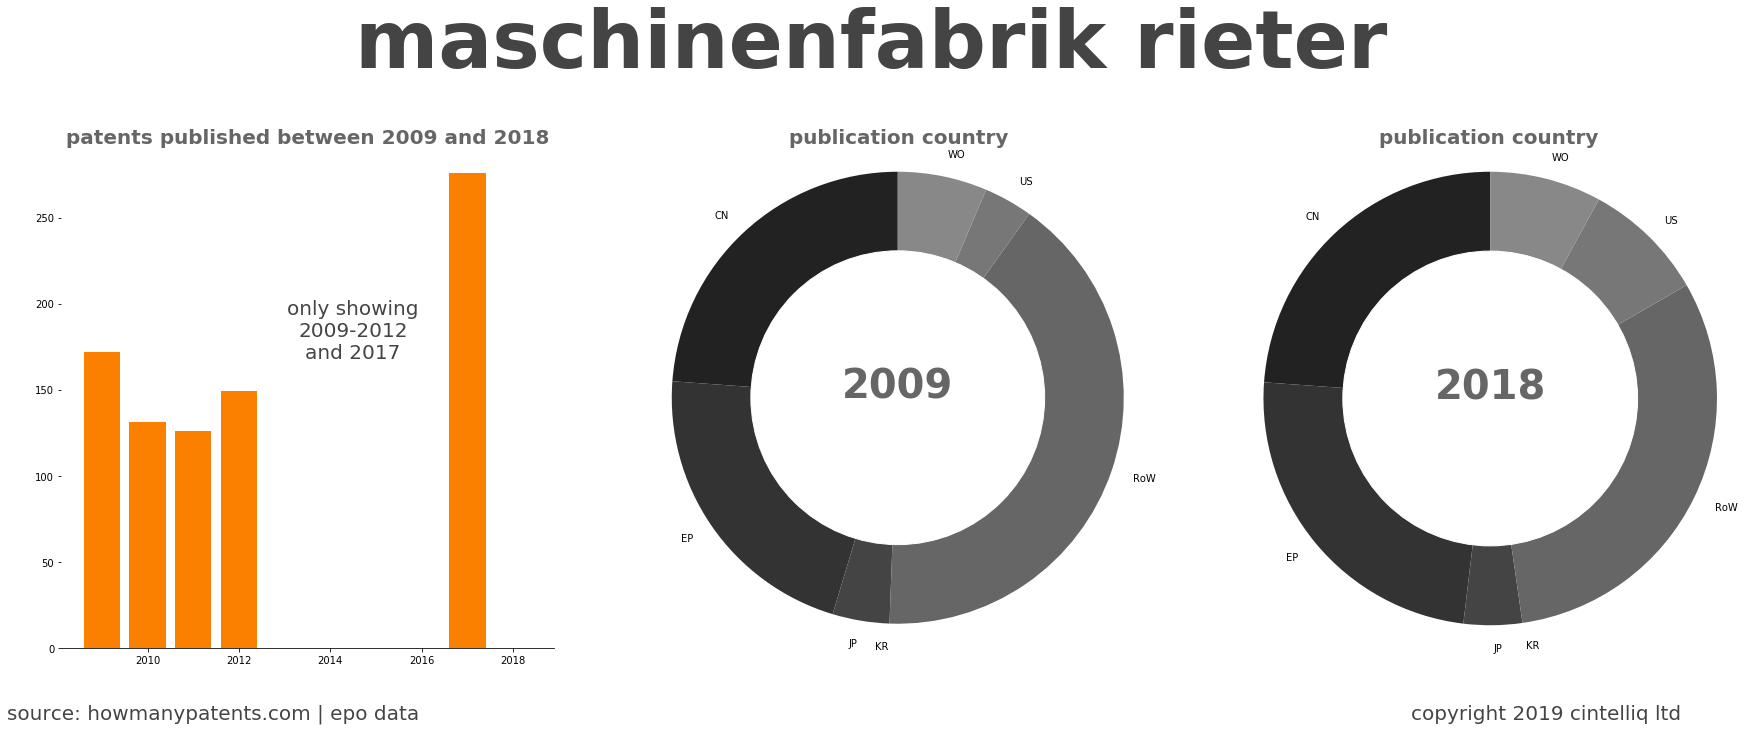 summary of patents for Maschinenfabrik Rieter